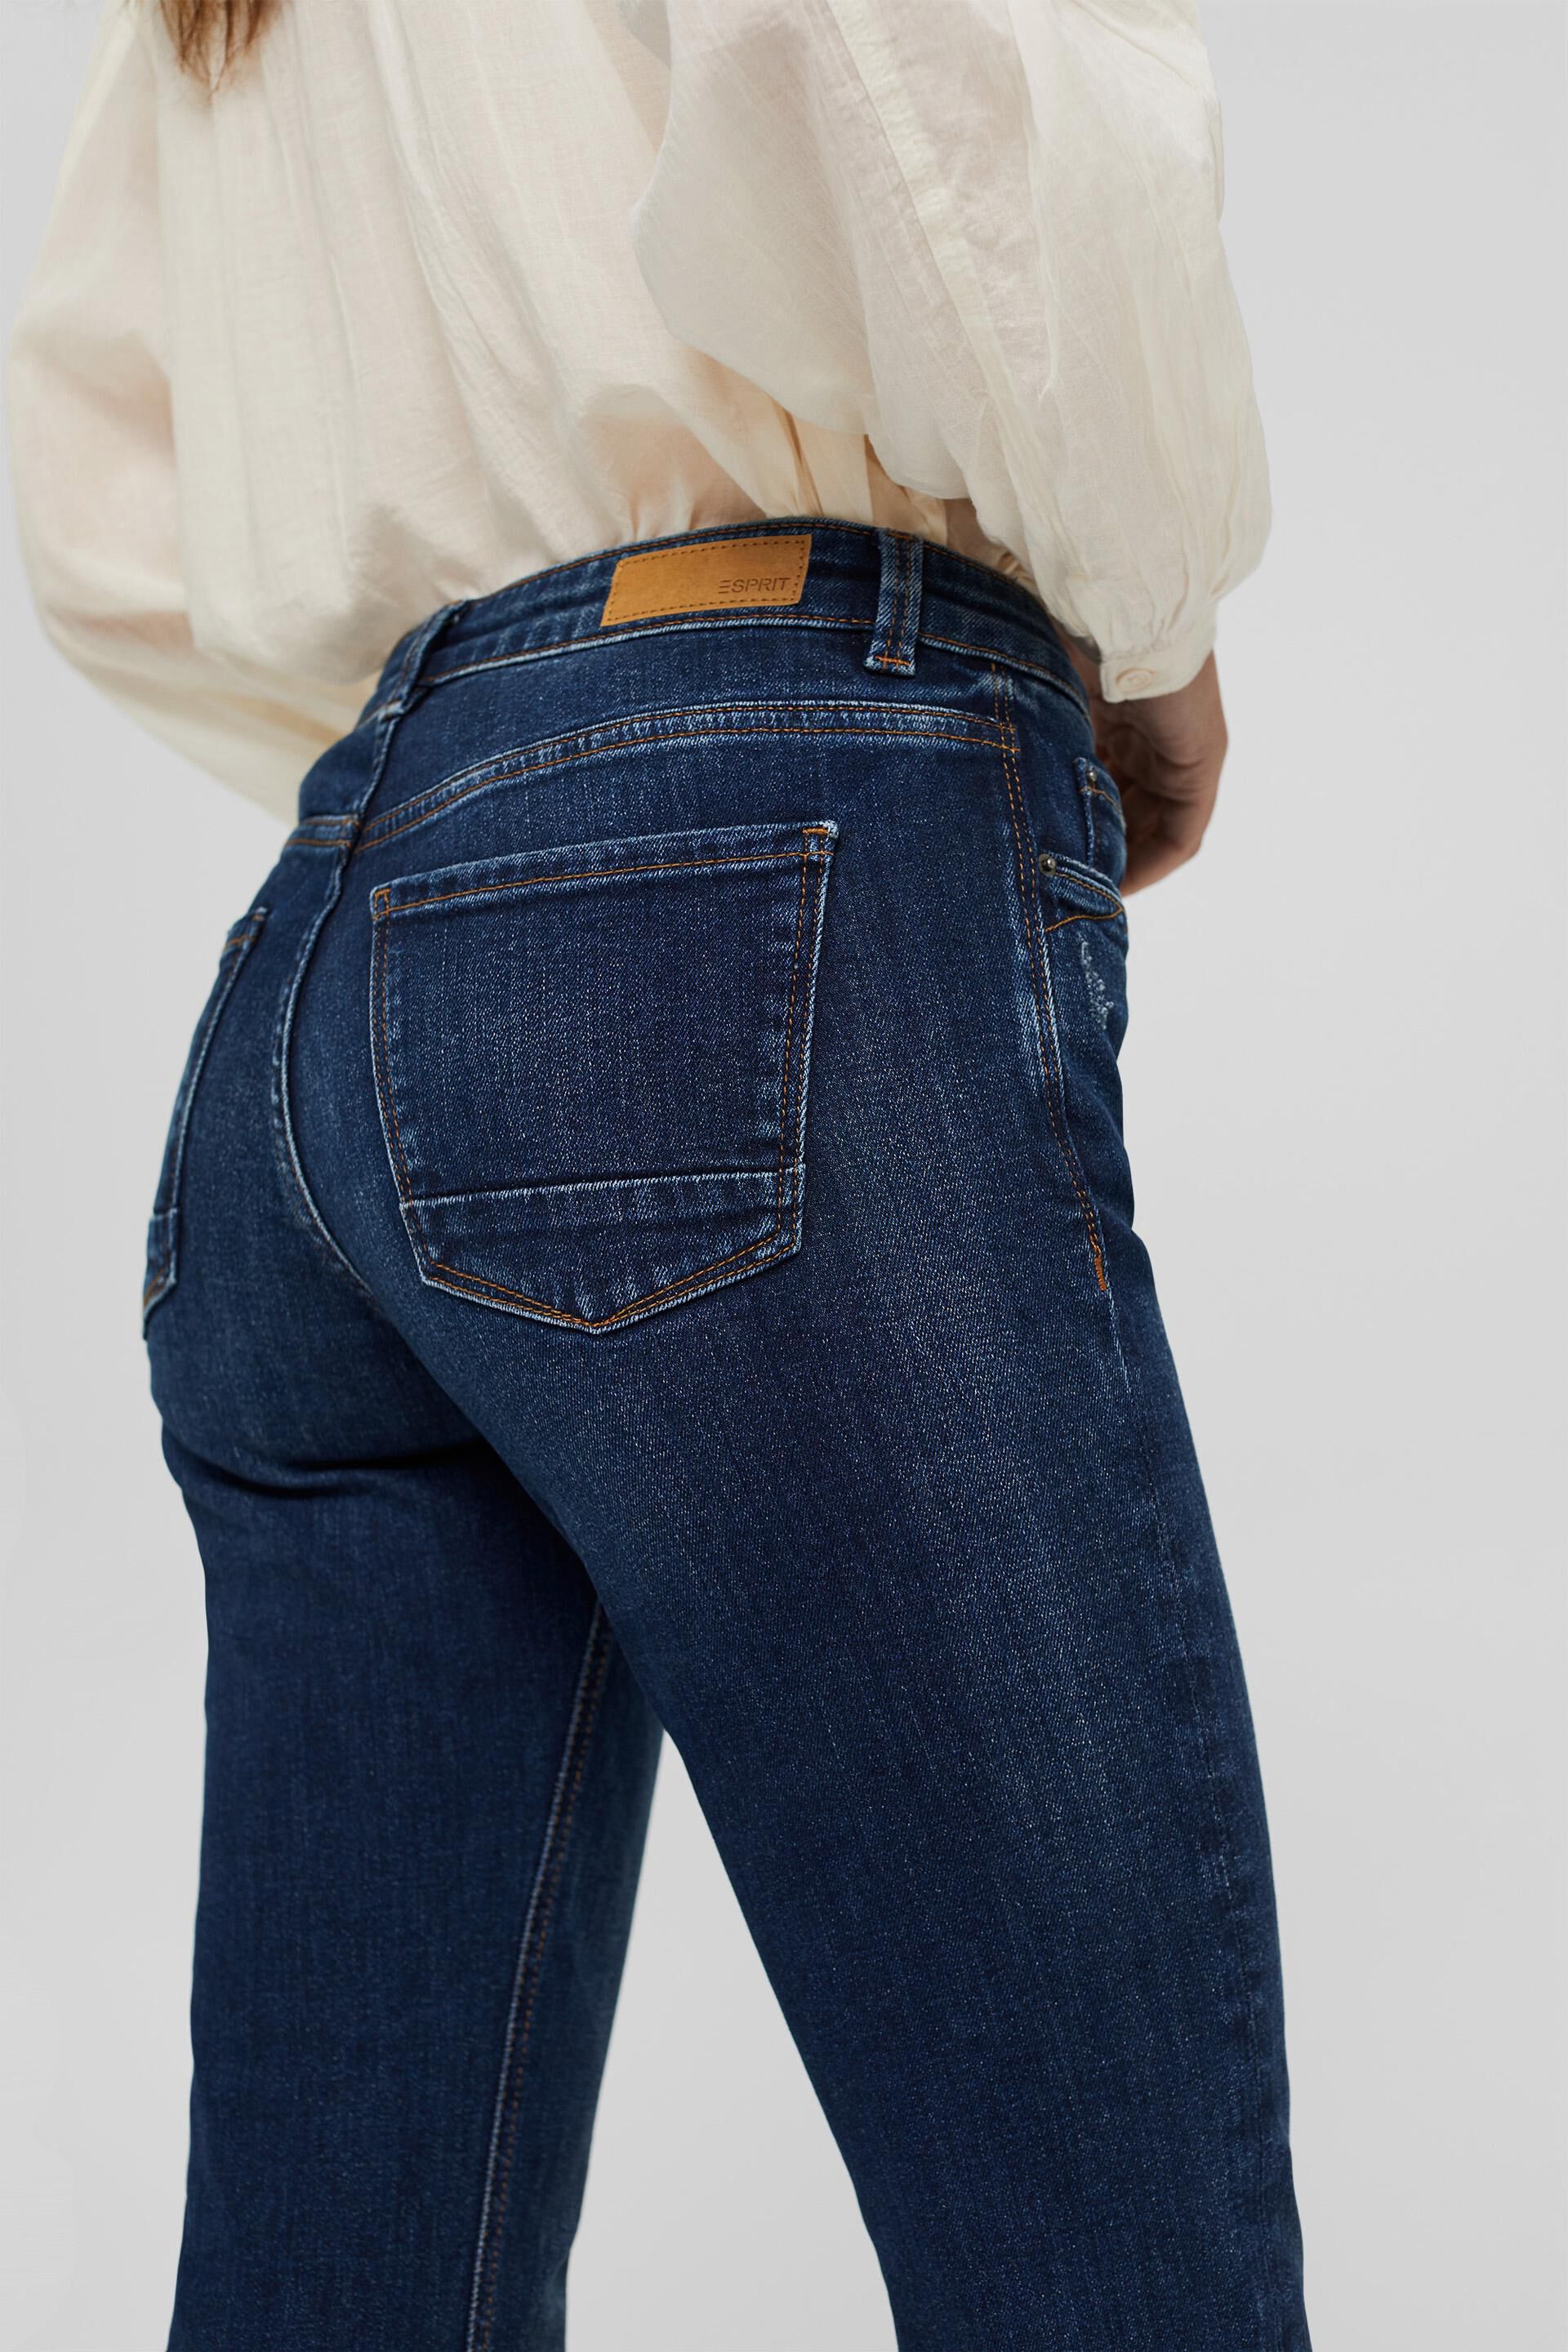 ESPRIT Superstretch-Jeans mit Organic Cotton